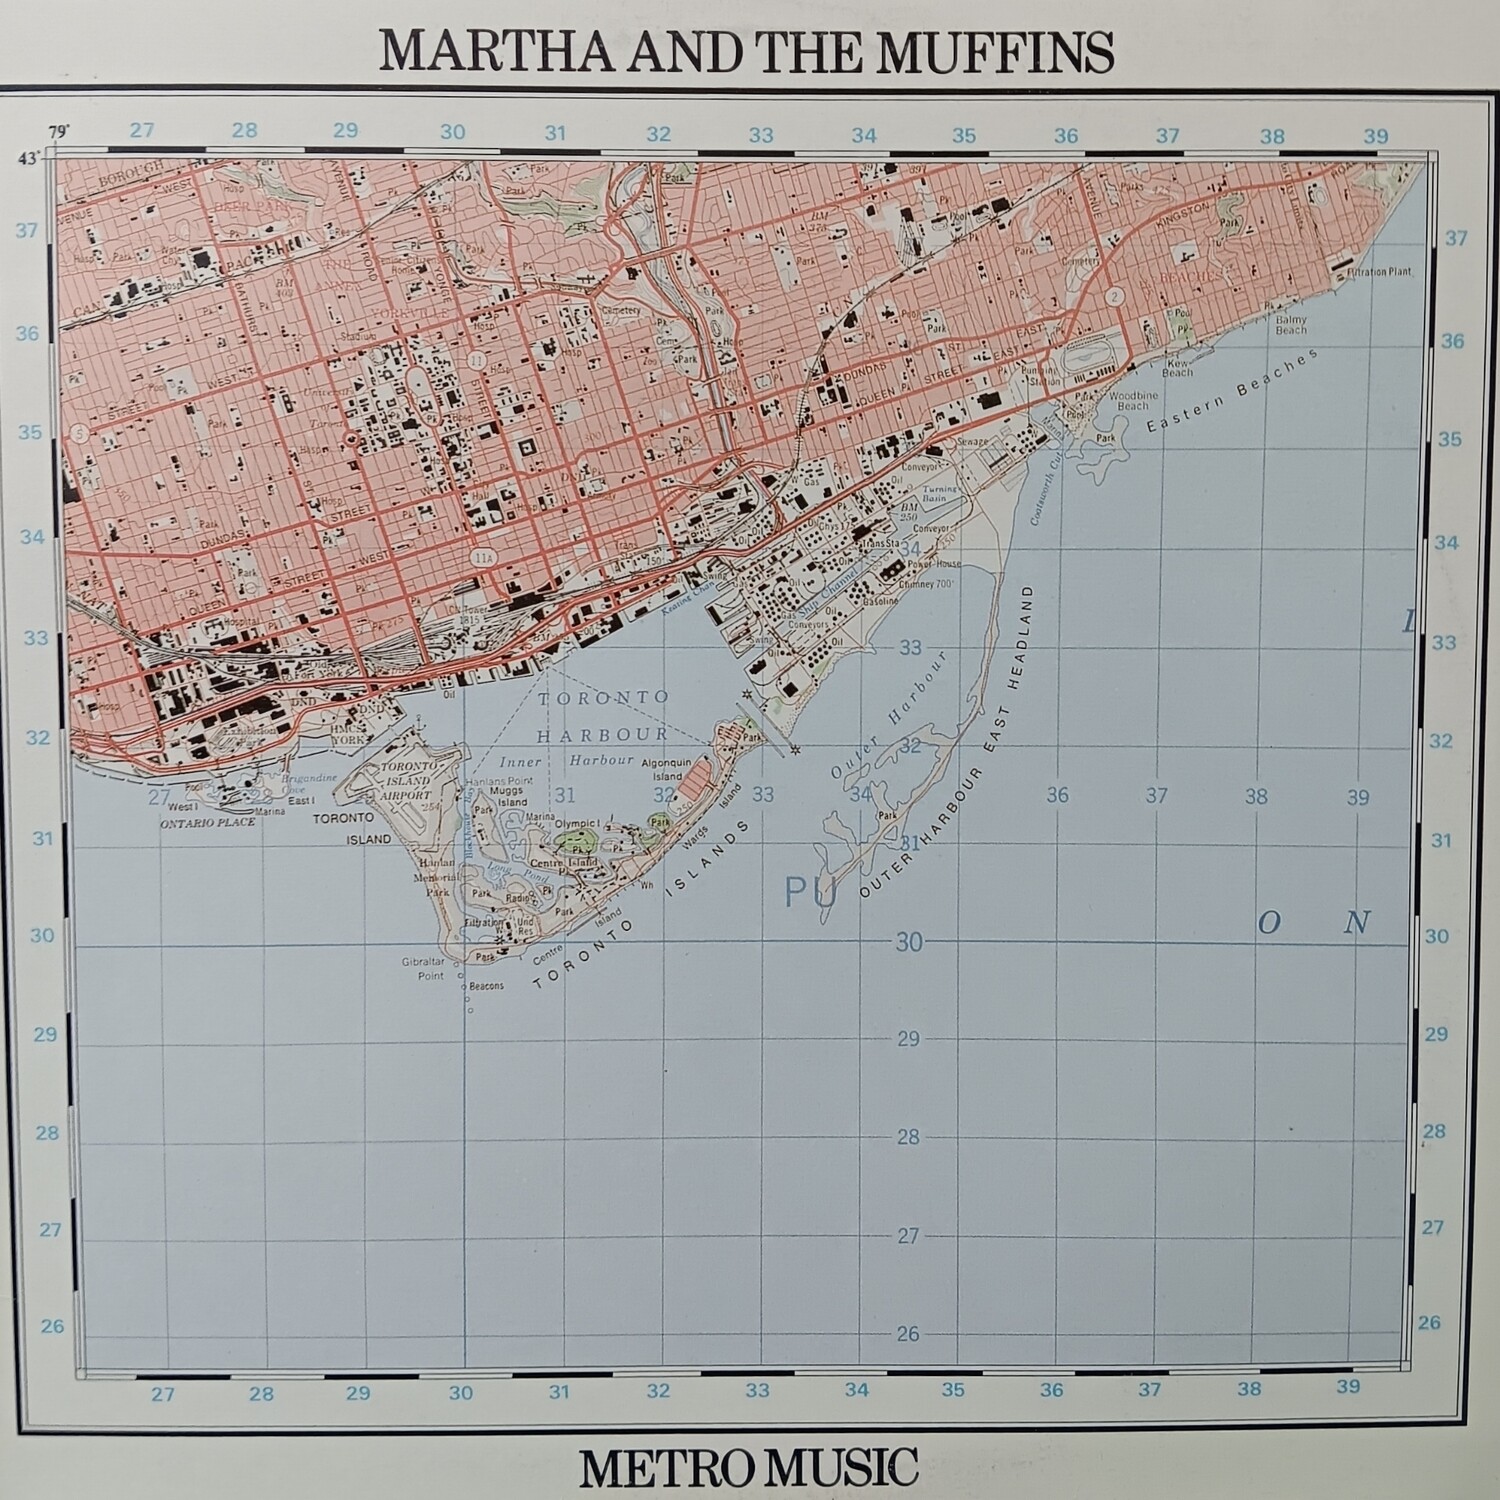 MARTHA AND THE MUFFINS - METRO MUSIC